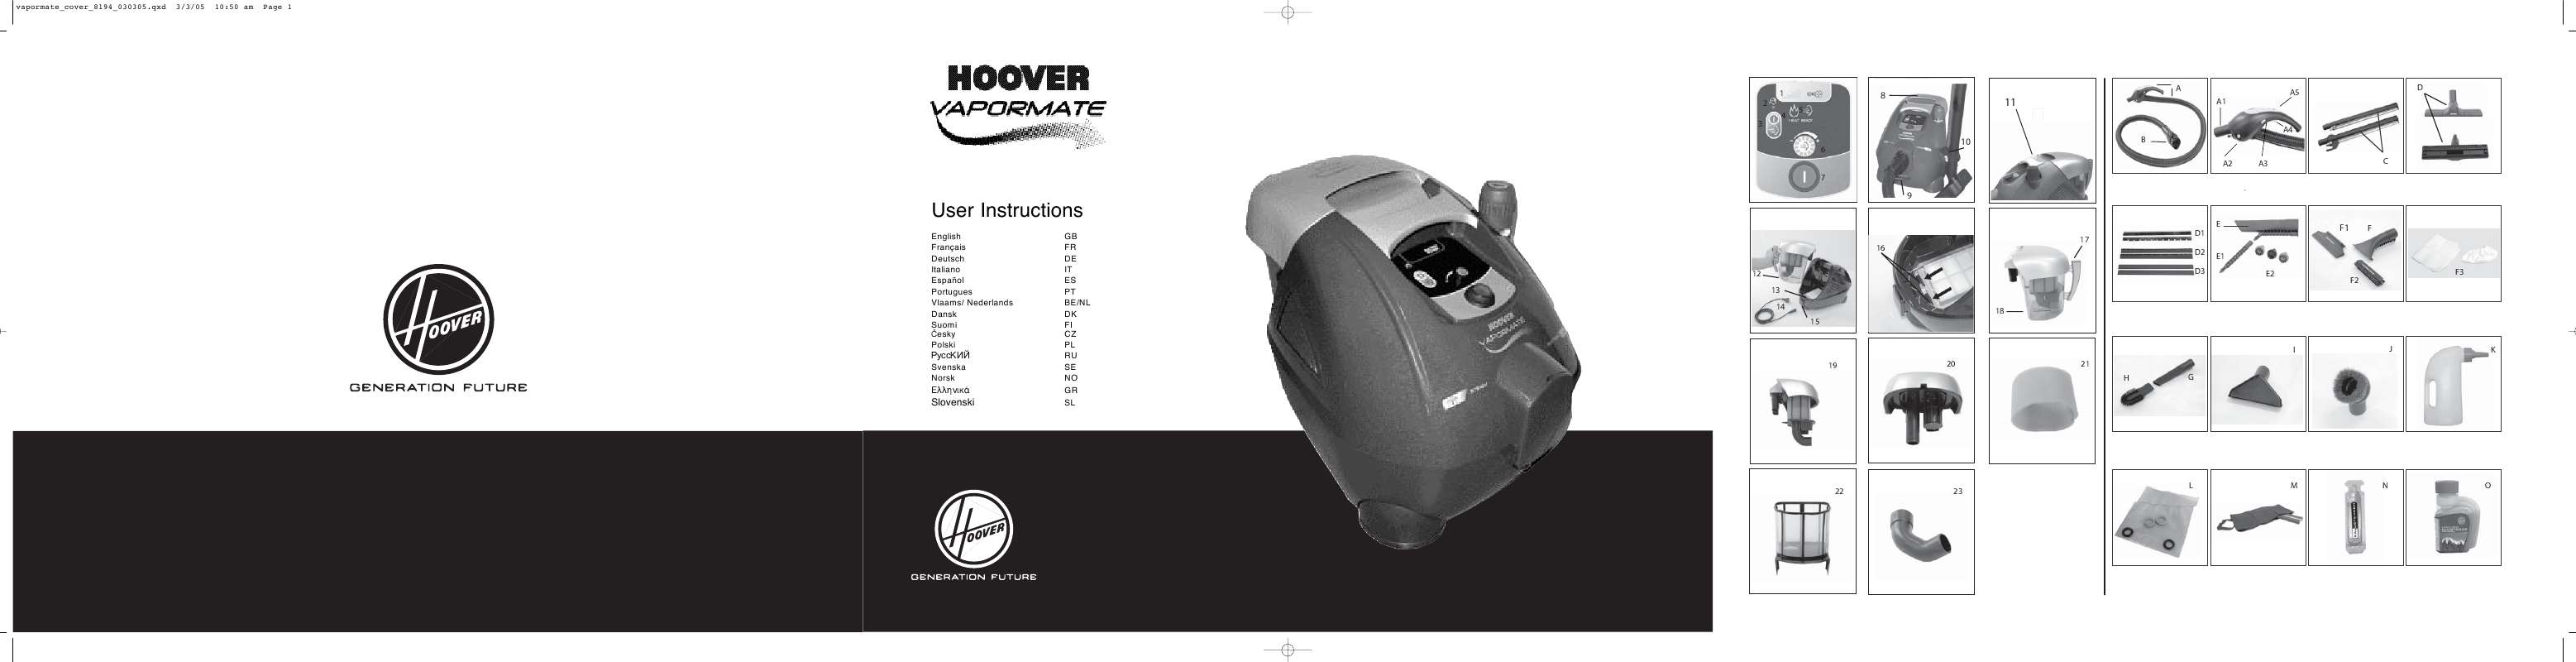 Guide utilisation  HOOVER VAPORMATE  de la marque HOOVER